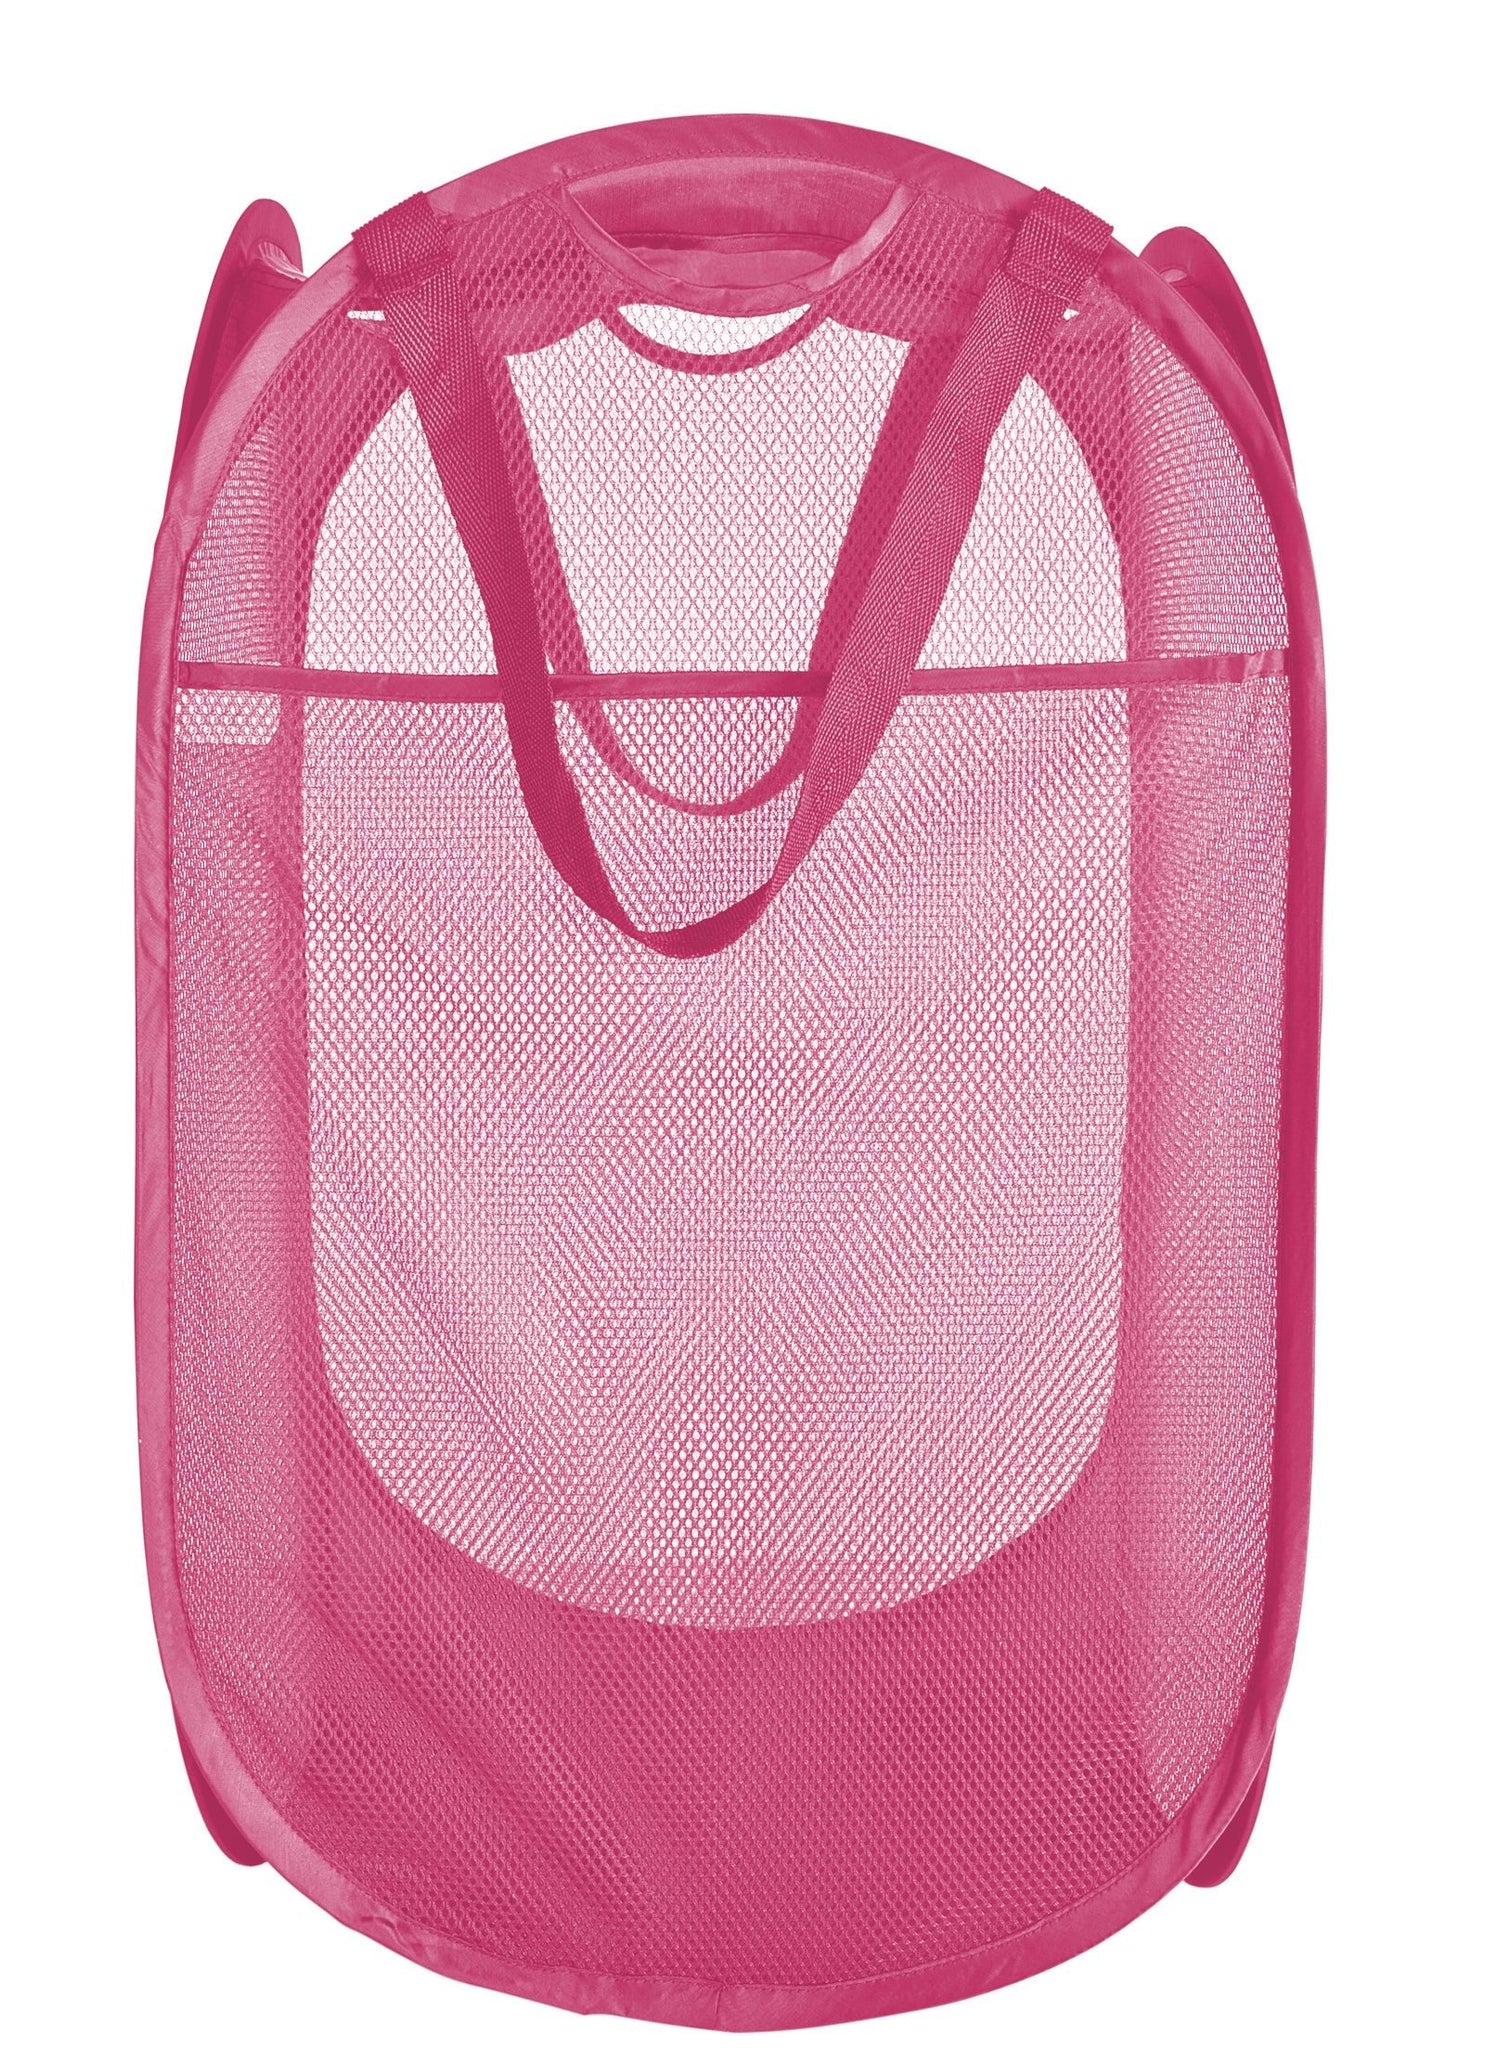 Smart Design | Deluxe Mesh Pop Up Square Laundry Hamper Pink